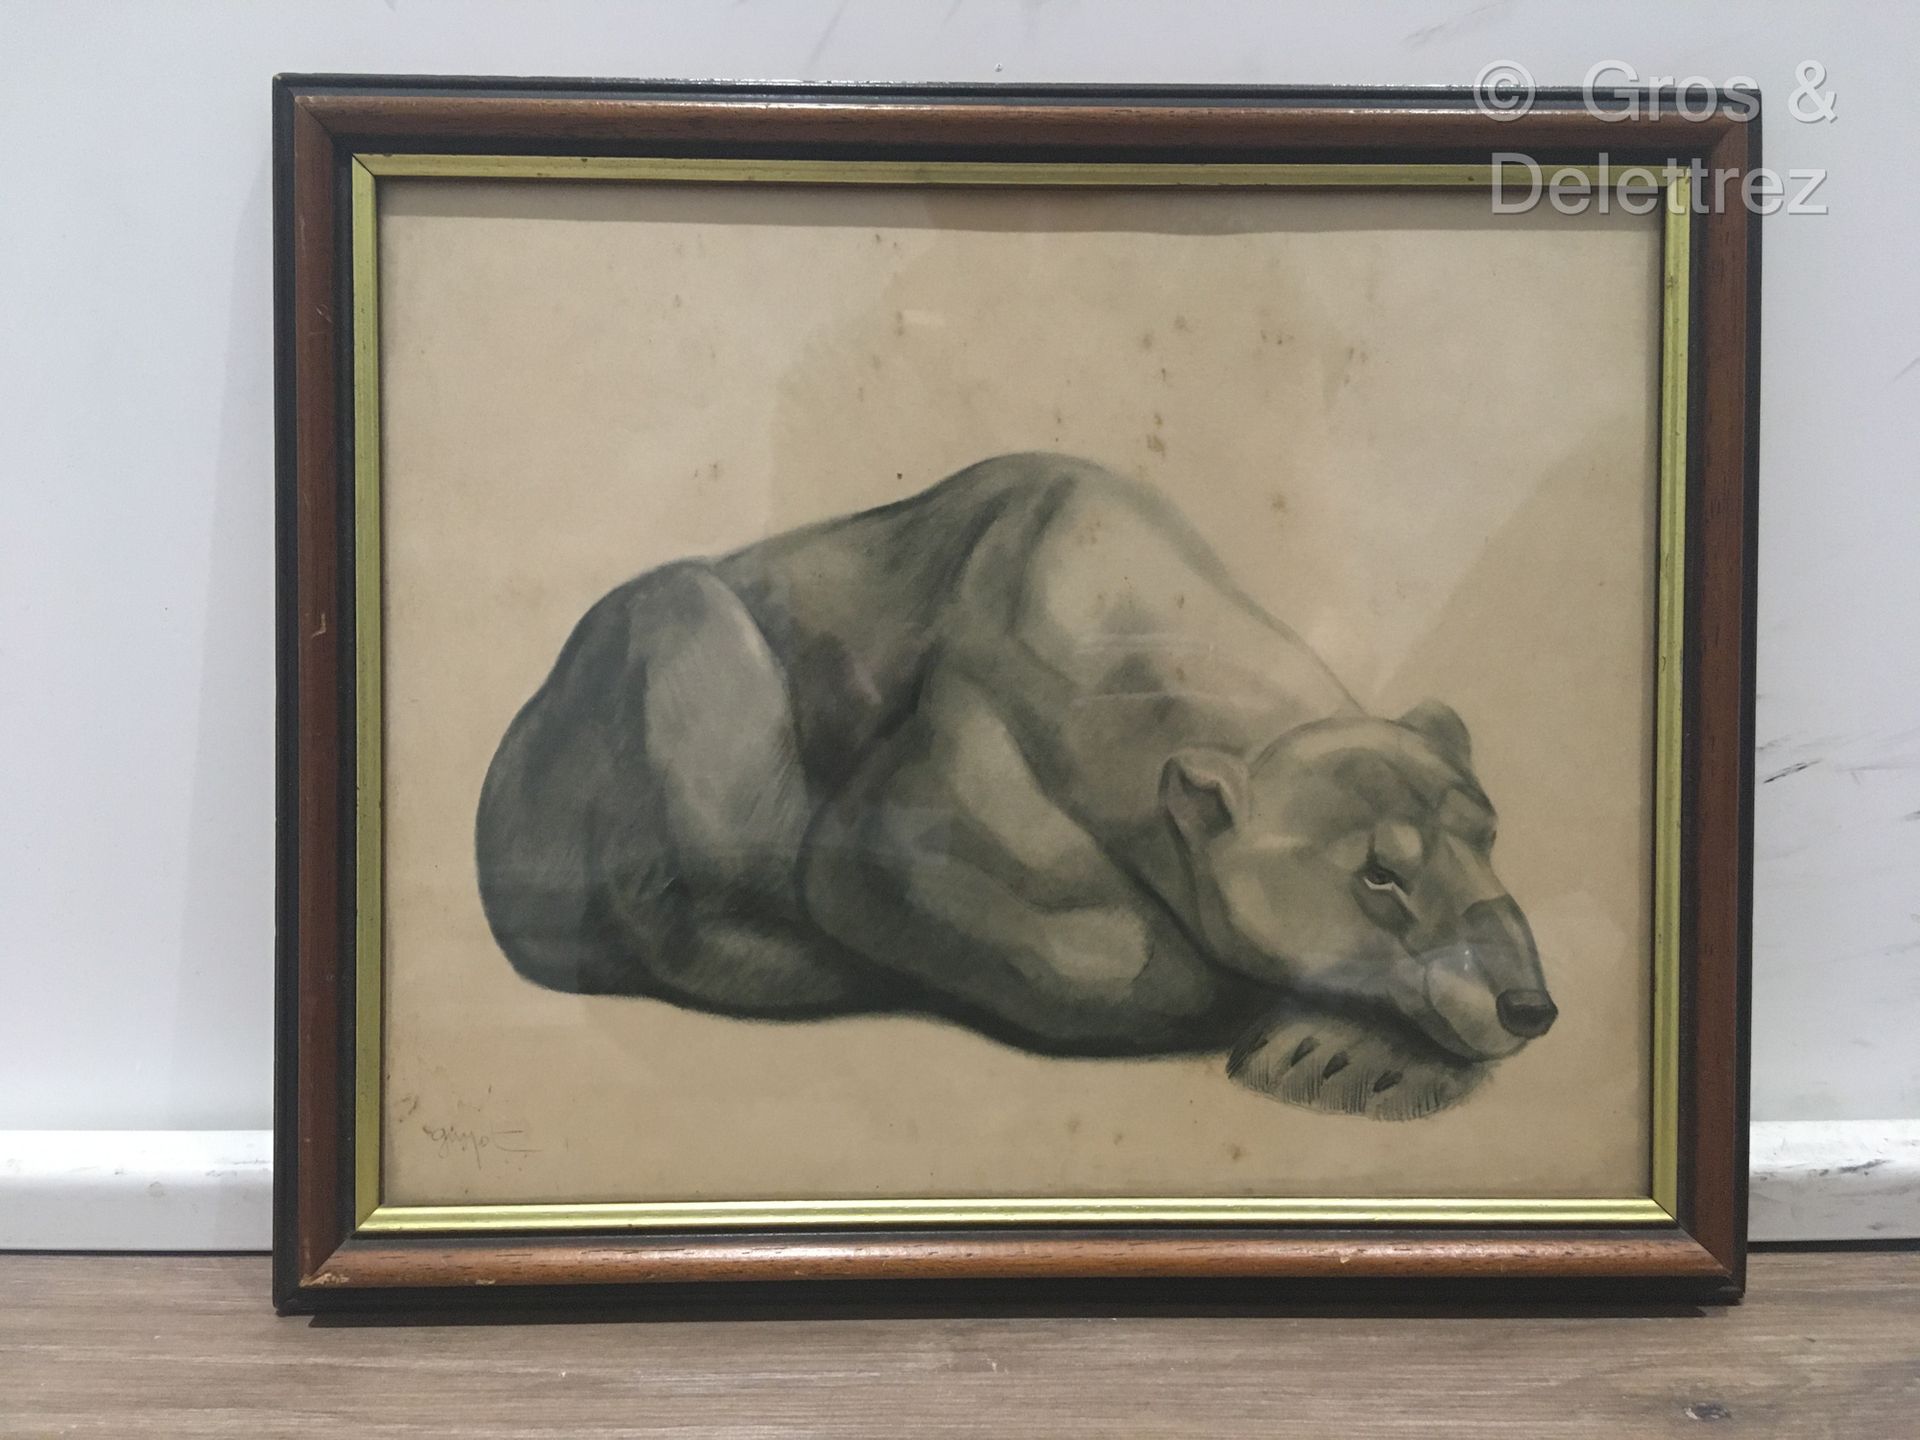 Null (E) 乔治-卢西恩-古约(1885-1973)

白熊

黑色的复制品

23 x 29 cm 正在观看